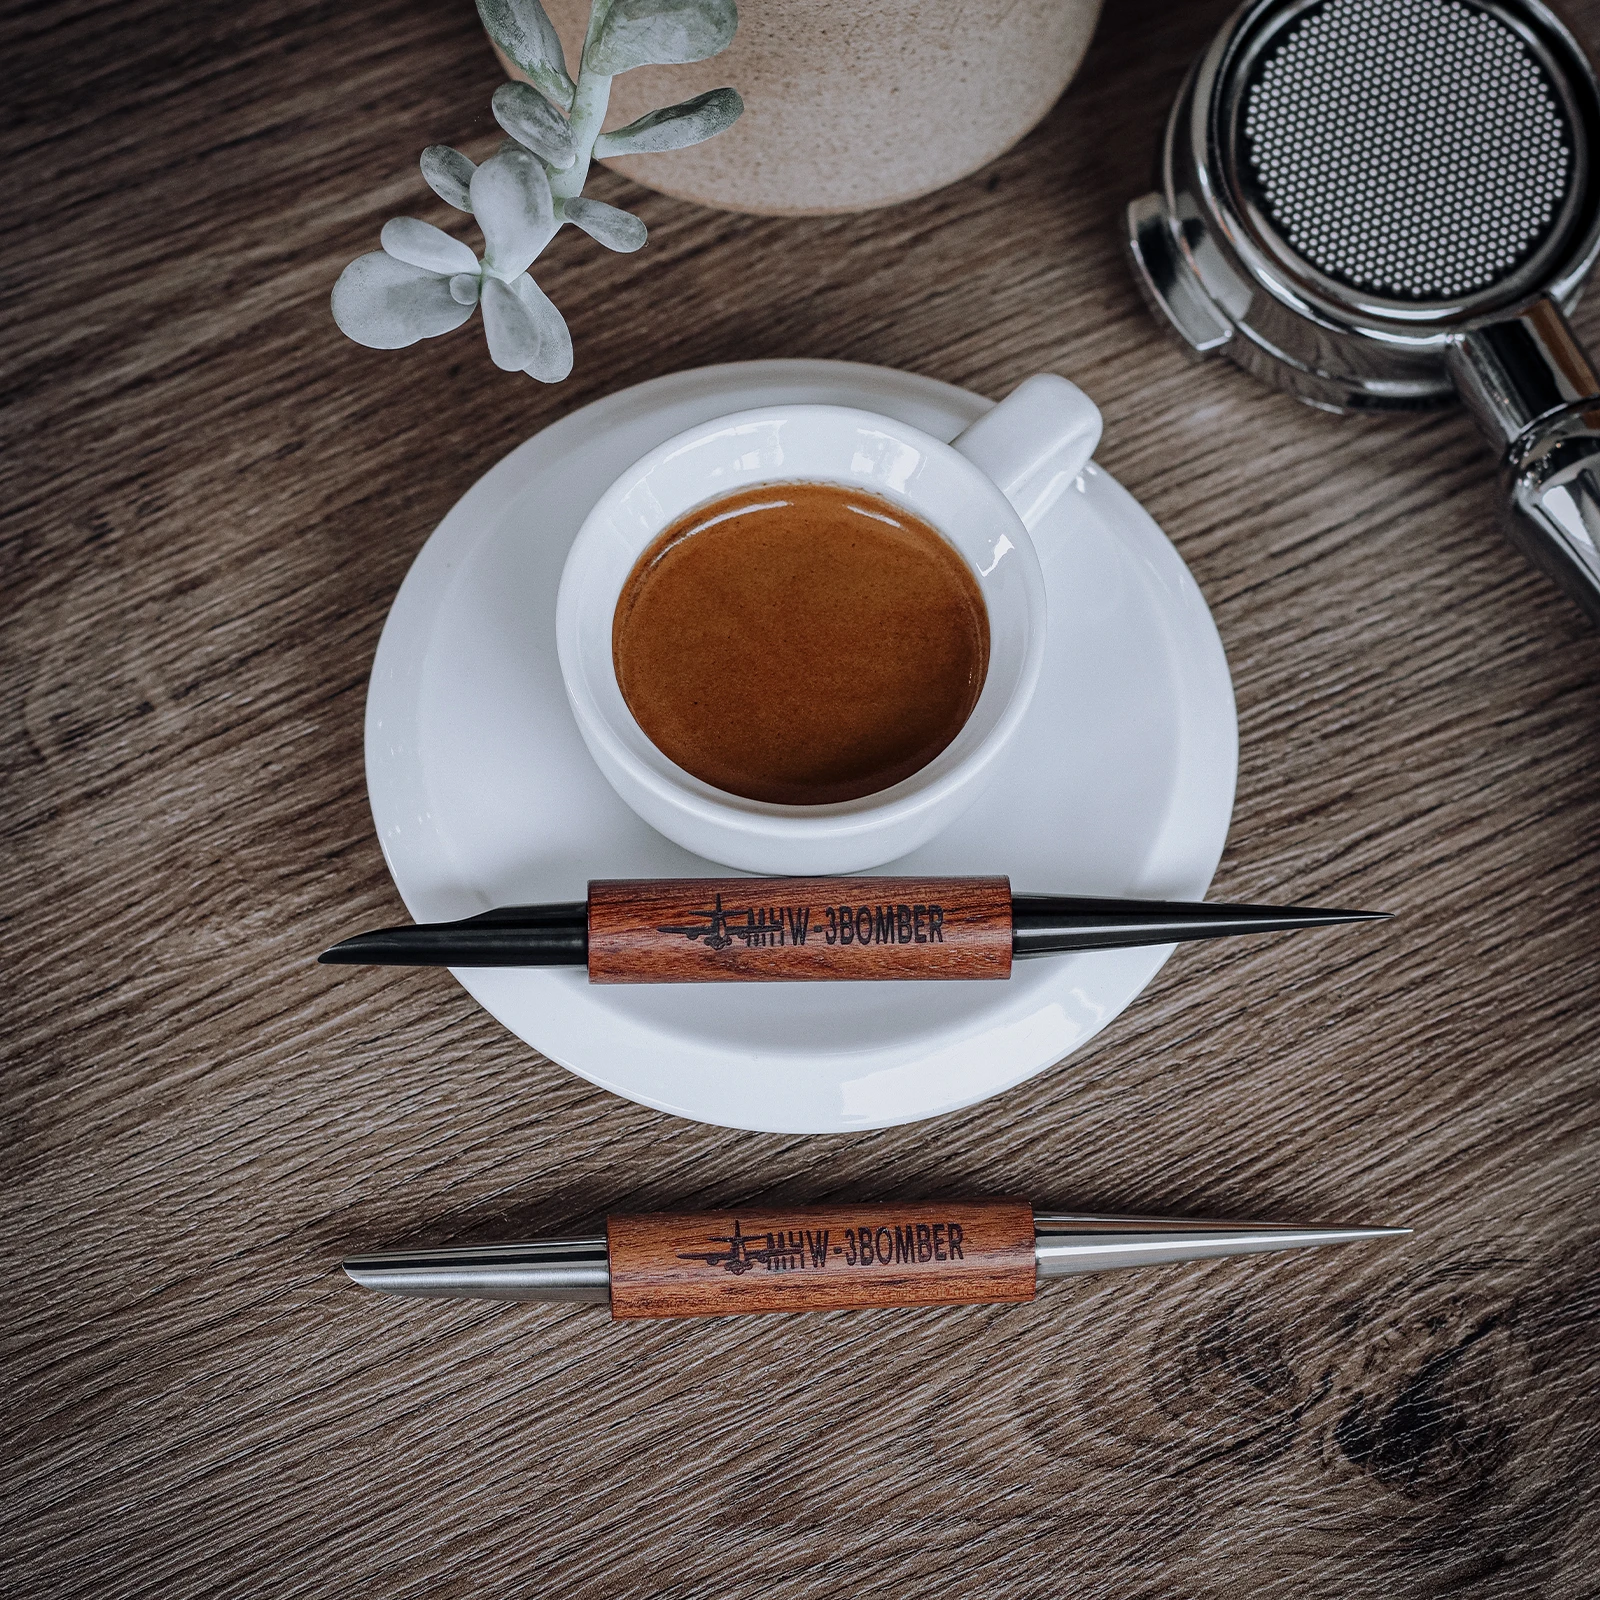 https://ae01.alicdn.com/kf/Se4092b790e814a139641de6b775f93c0g/MHW-3BOMBER-Coffee-Art-Pen-for-Latte-Vintage-Espresso-Art-Needles-Home-Barista-Tool-Chic-Cappuccino.jpg